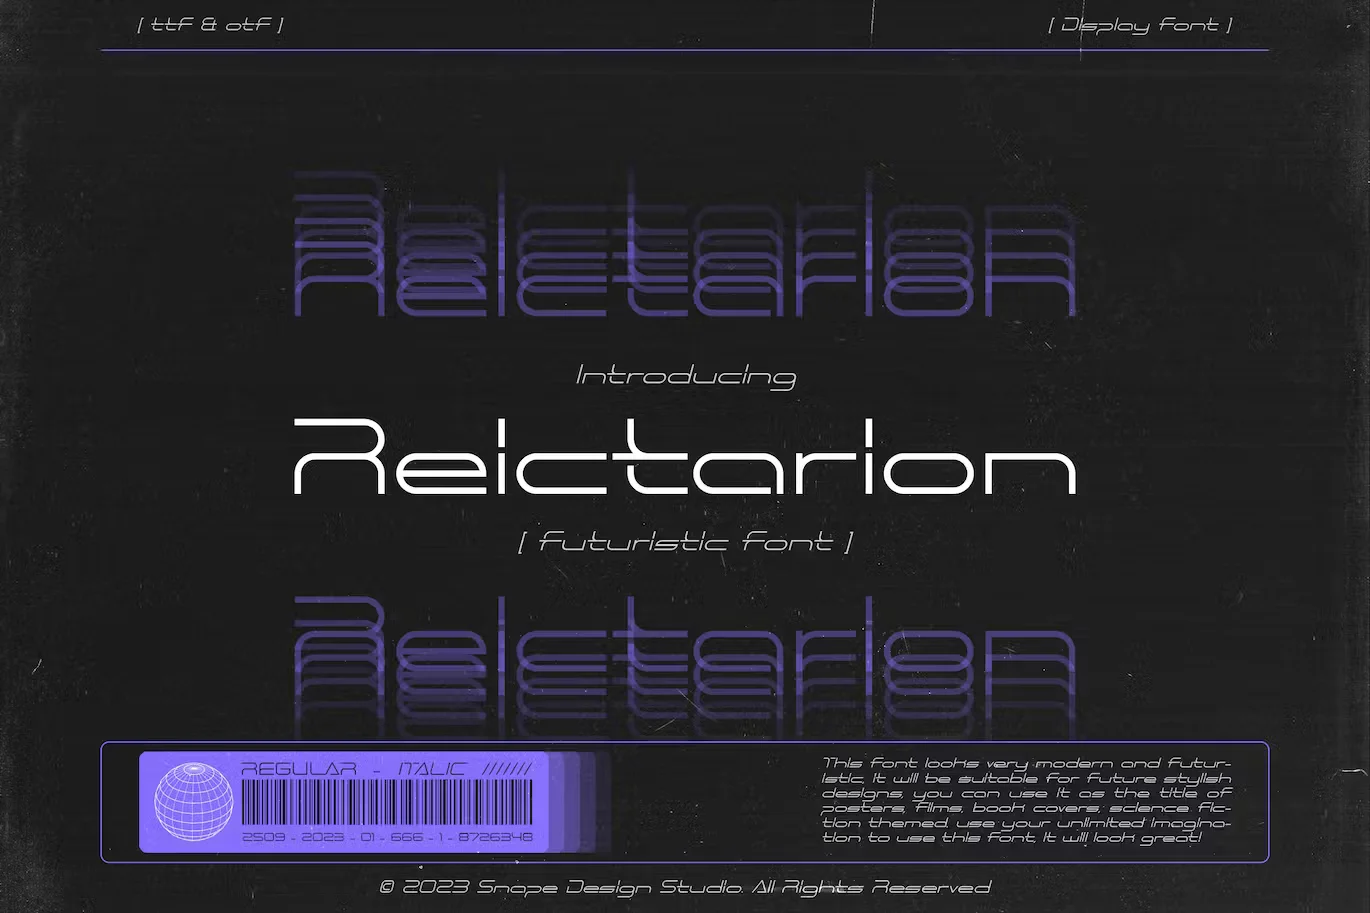 Reictarion - Futuristic Font